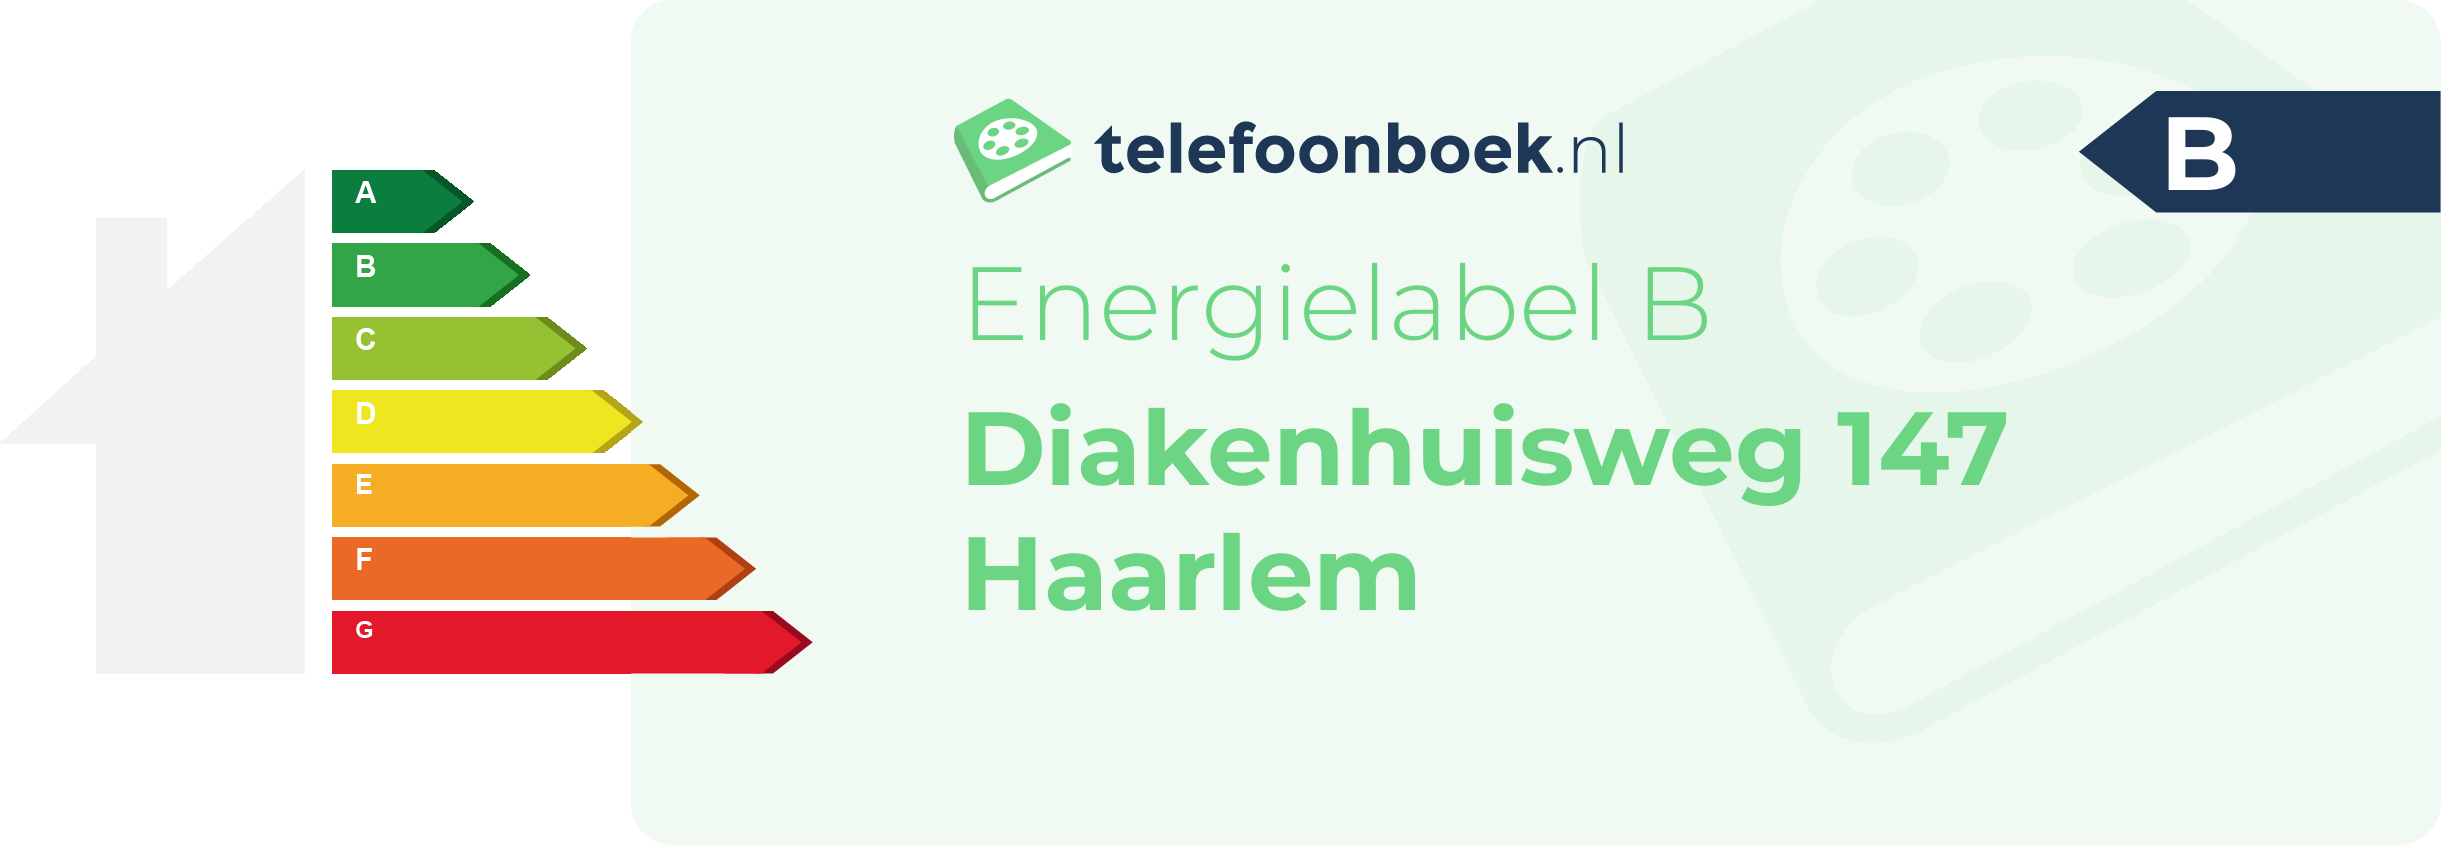 Energielabel Diakenhuisweg 147 Haarlem